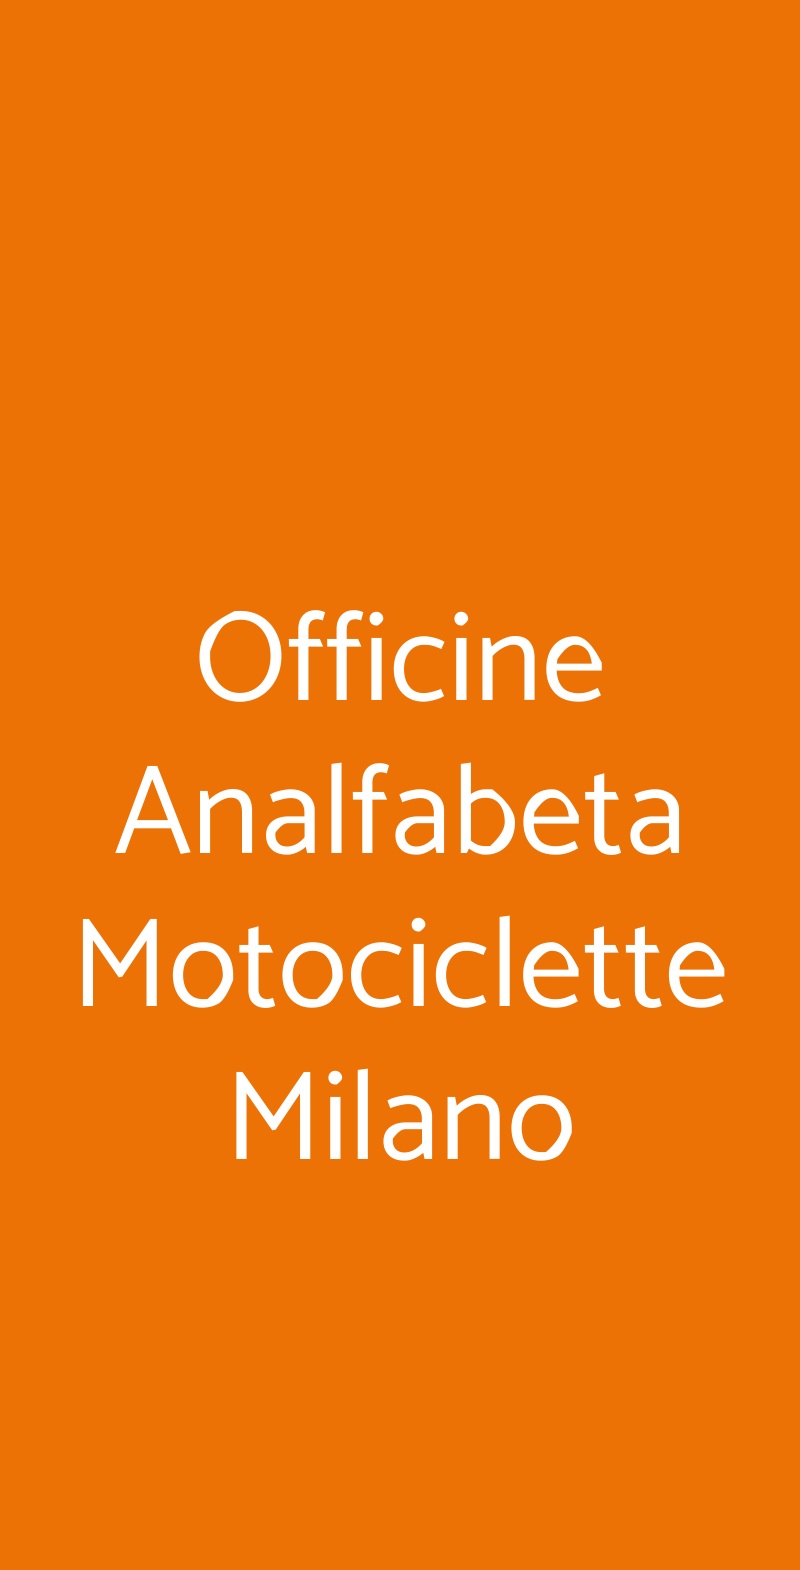 Officine Analfabeta Motociclette Milano Milano menù 1 pagina